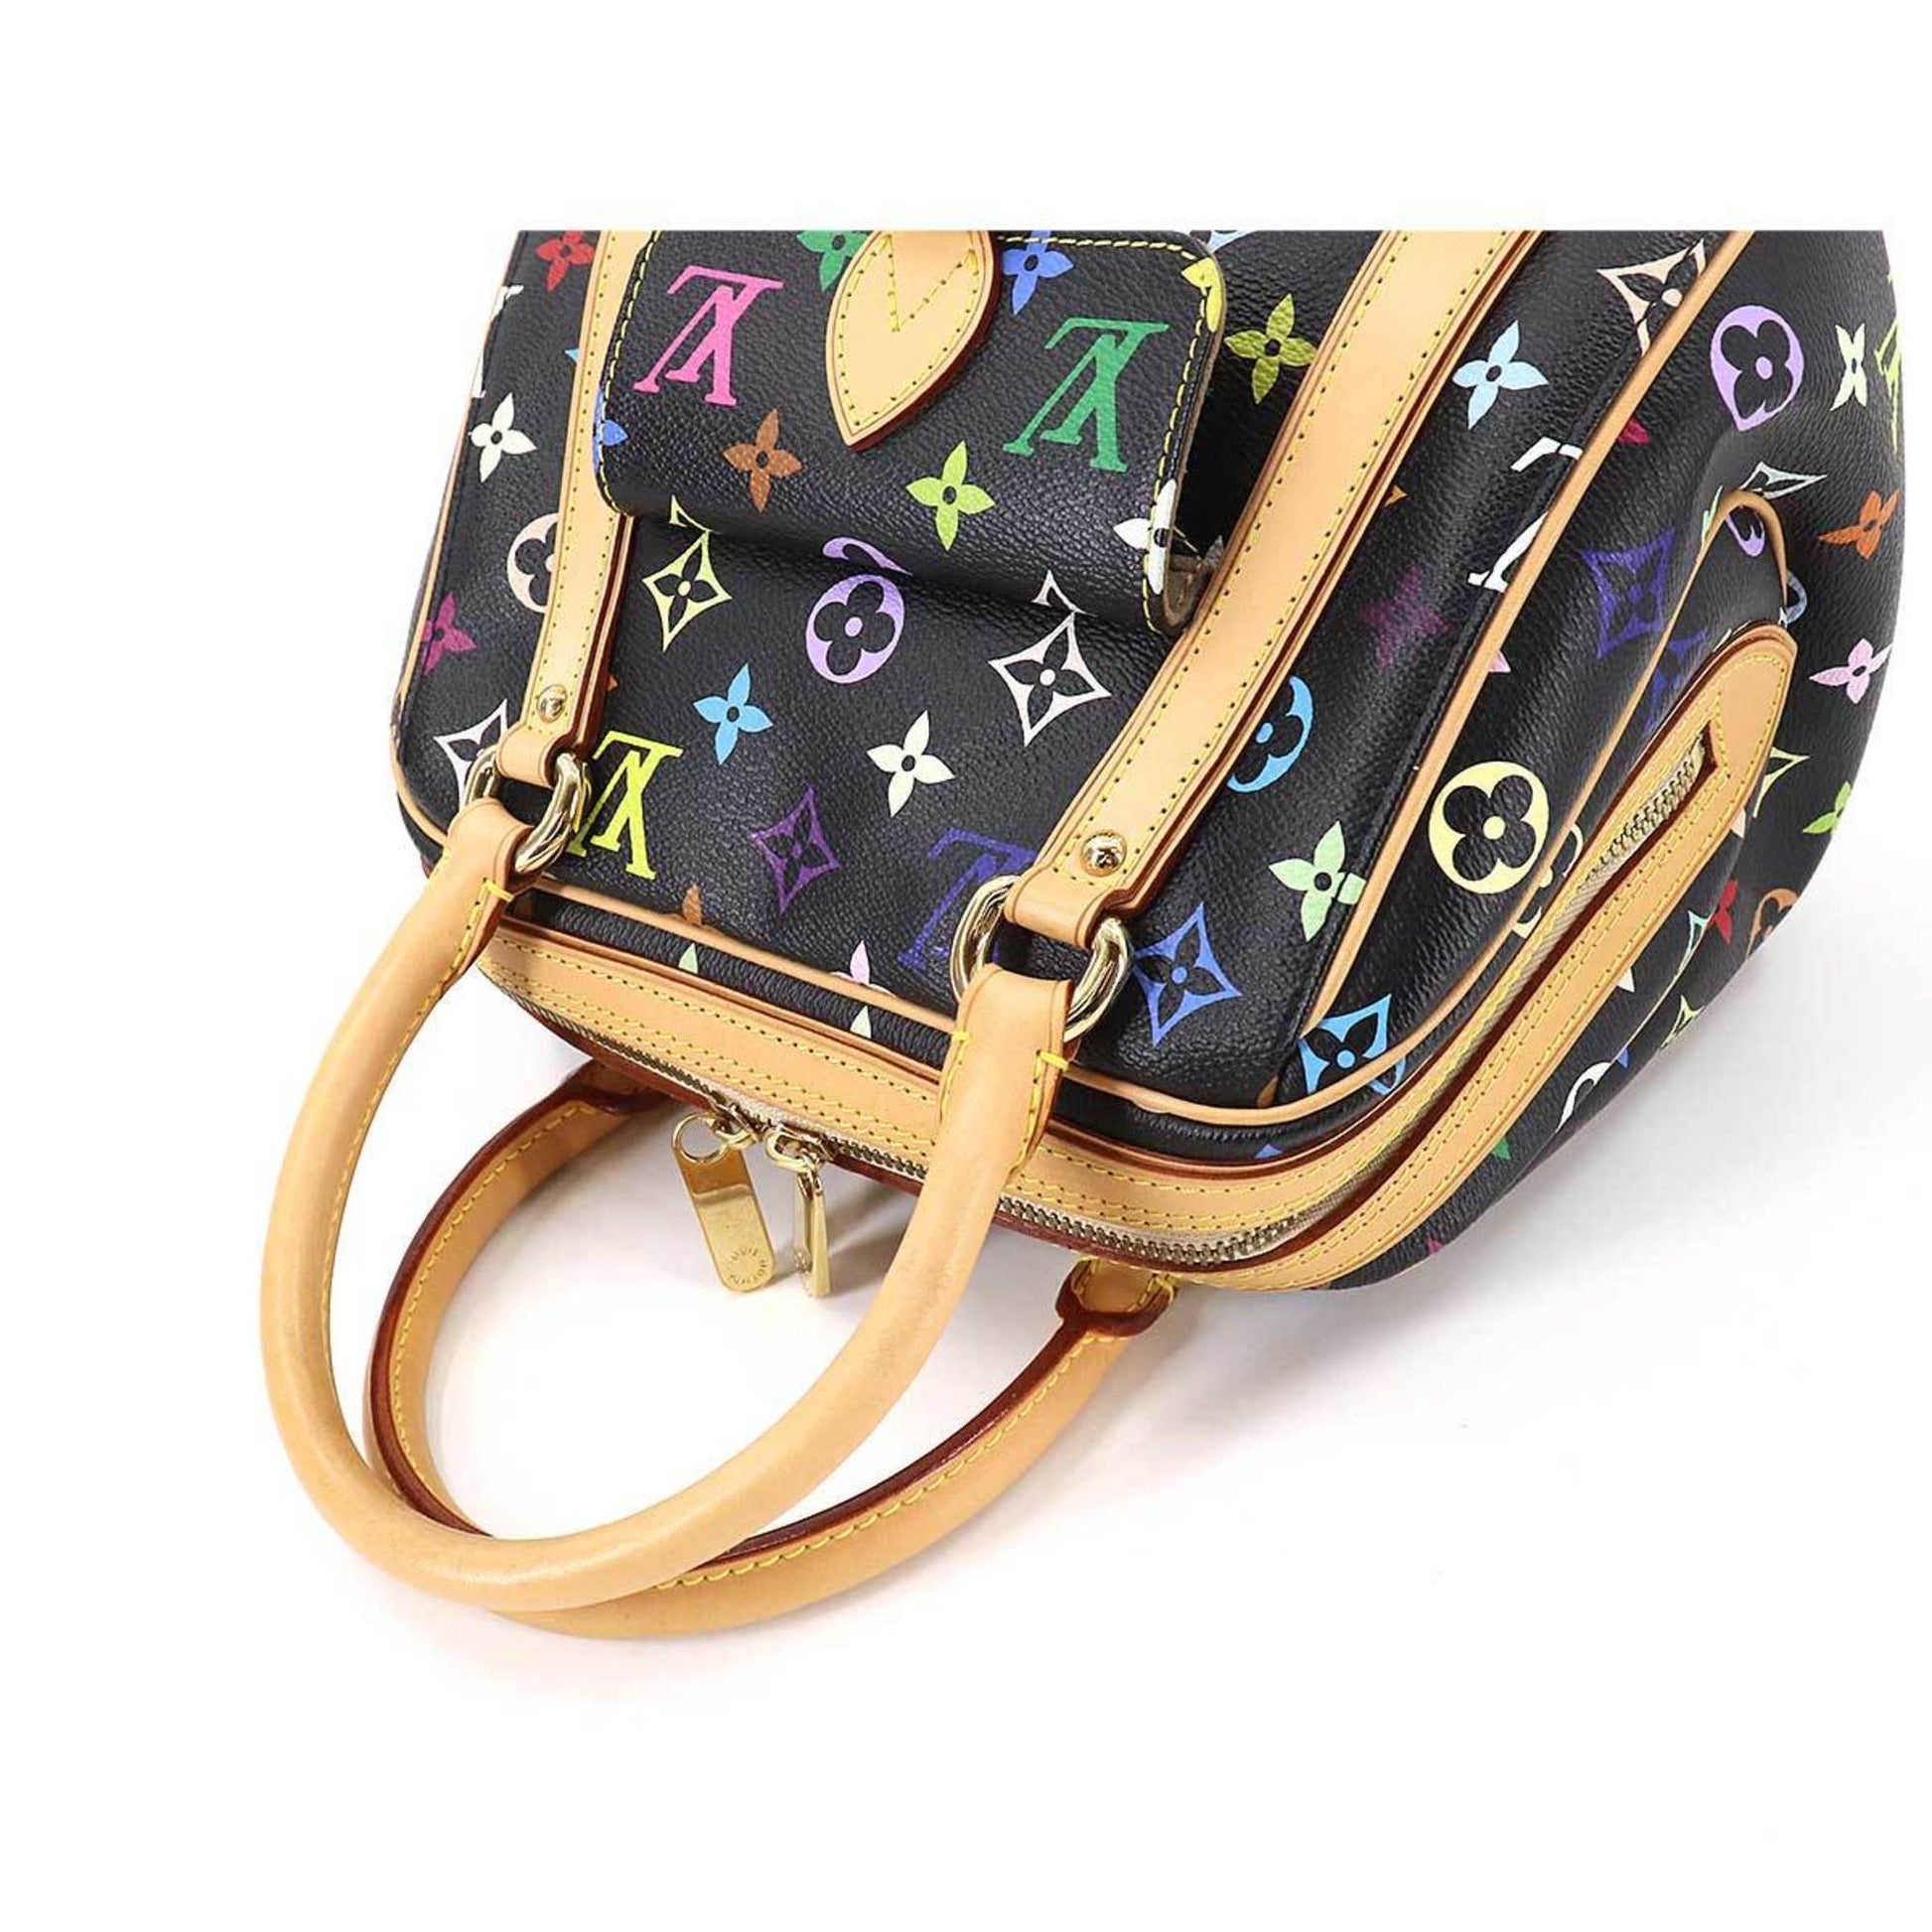 Louis Vuitton Monogram Multicolor Priscilla Hand Bag Noir M40097